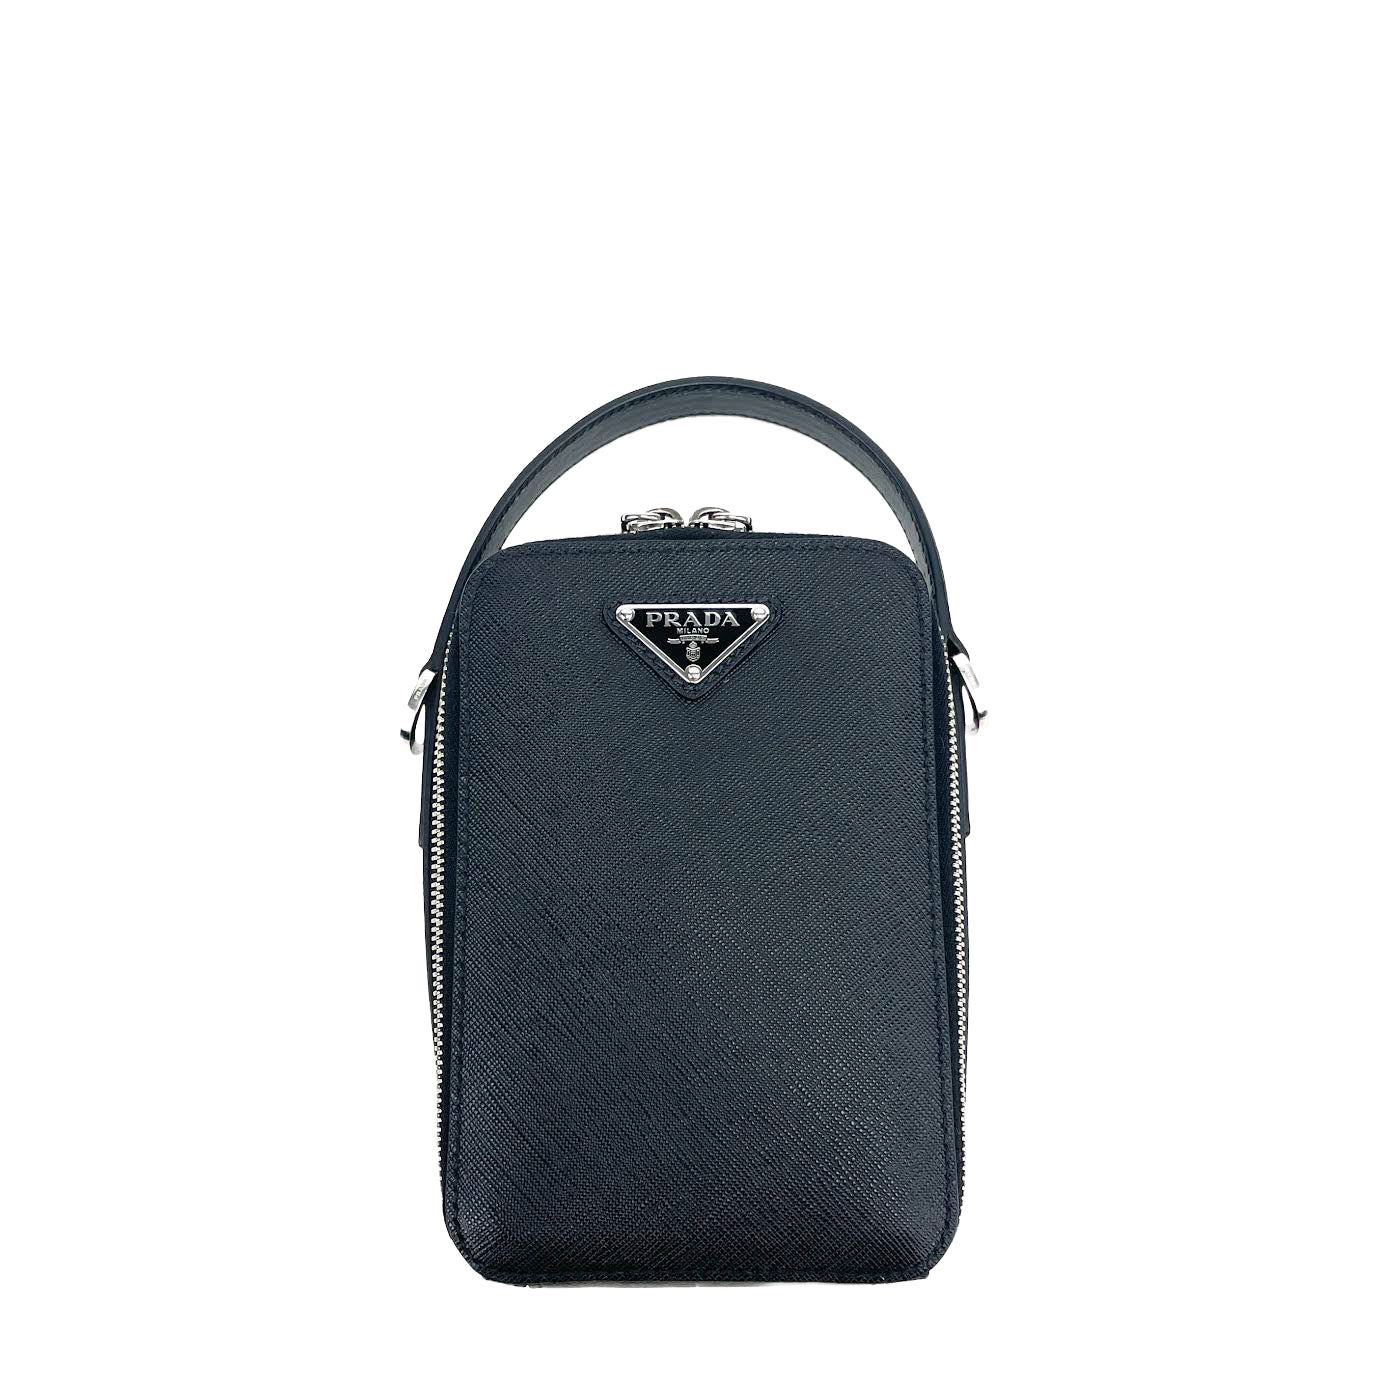 Prada Brique Saffiano Leather Bag In Blue